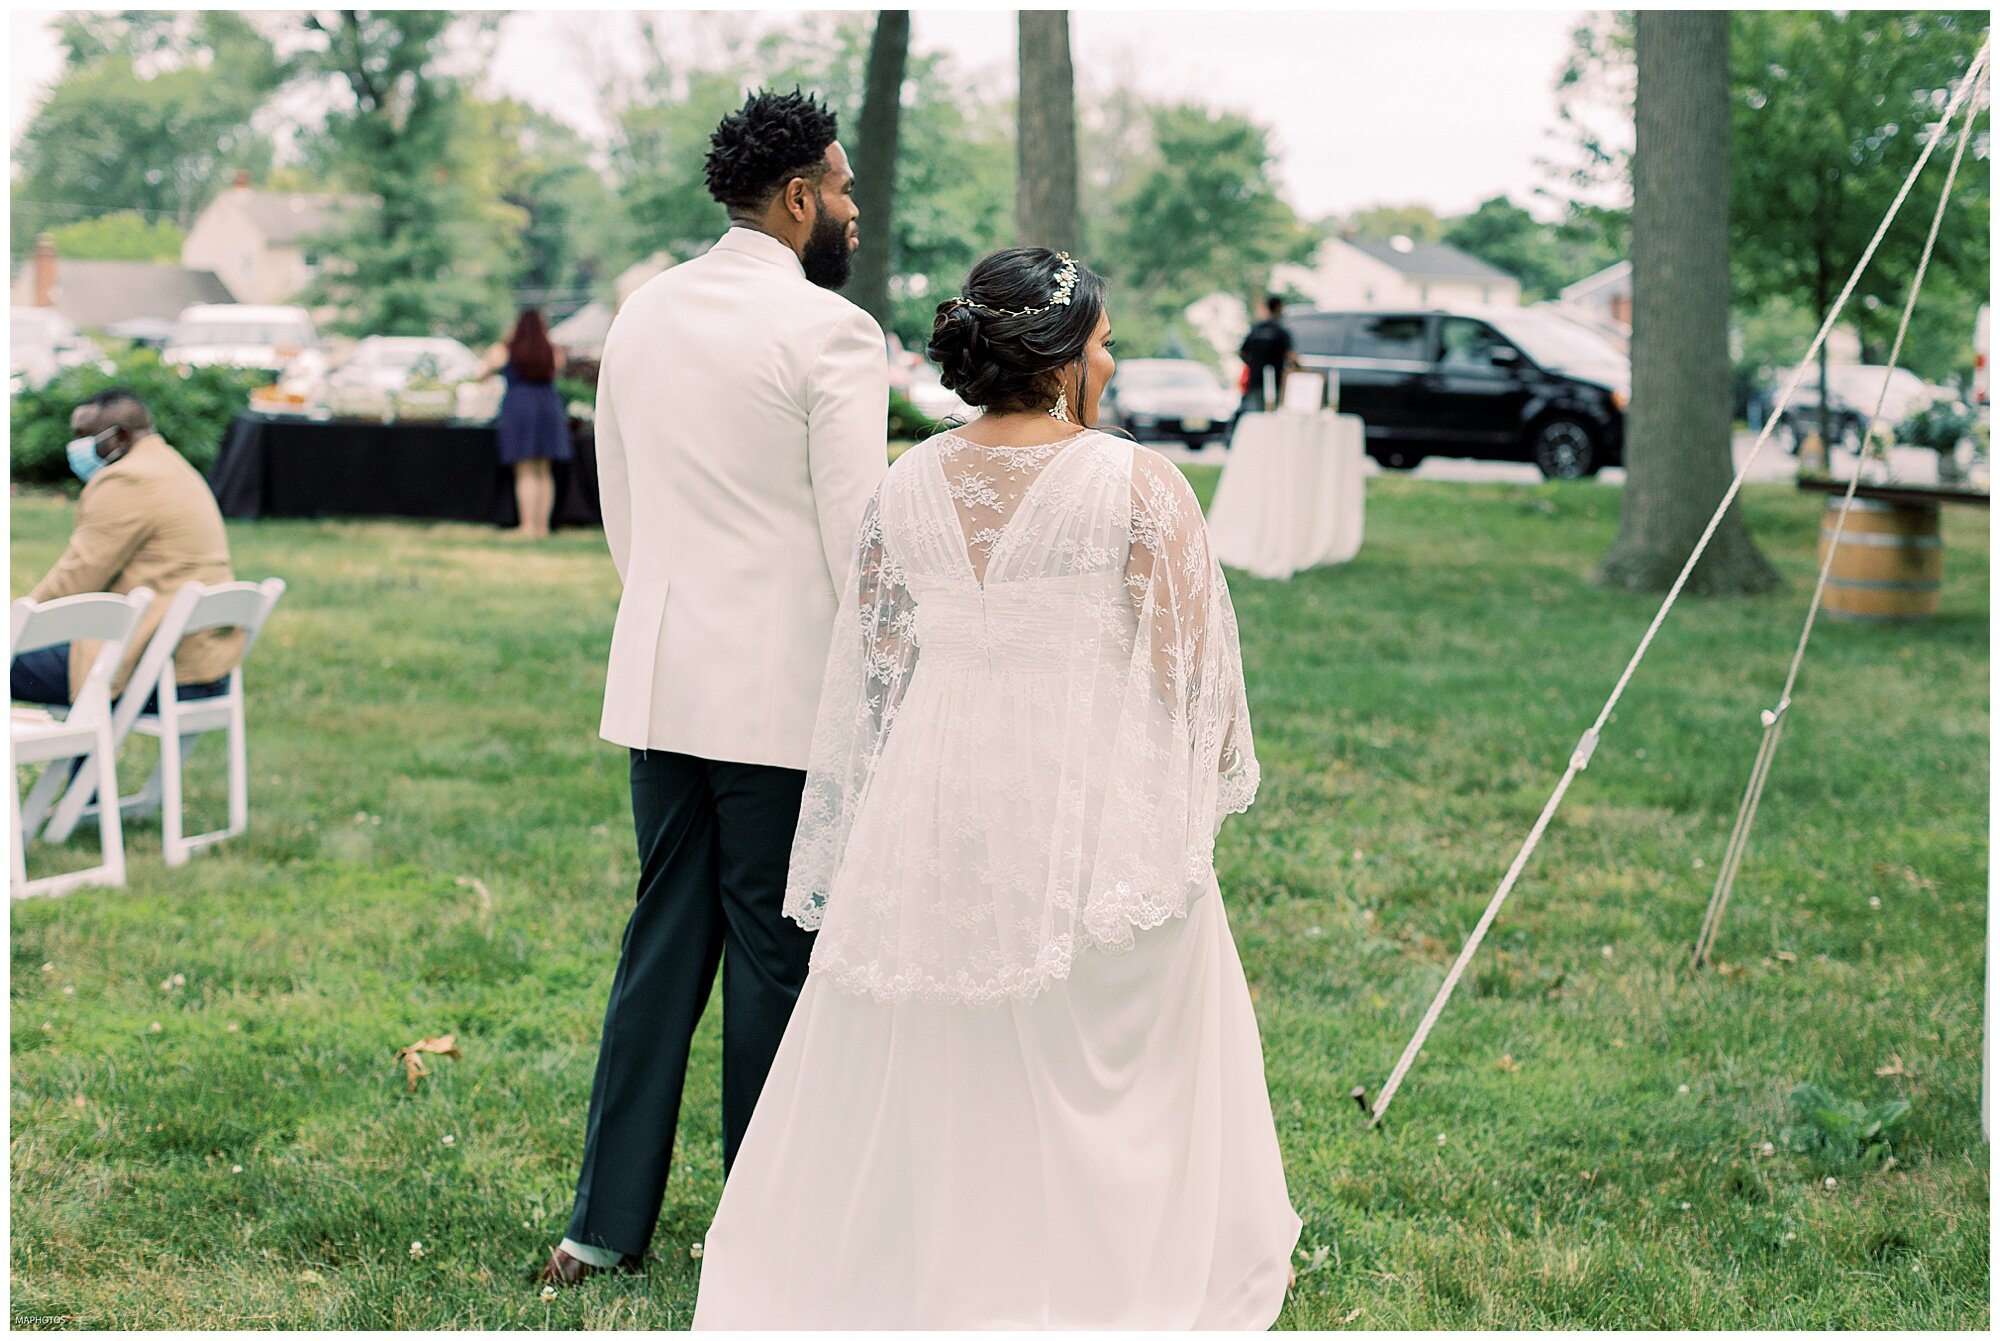 An Intimate Backyard Wedding in Cherry Hill, NJ